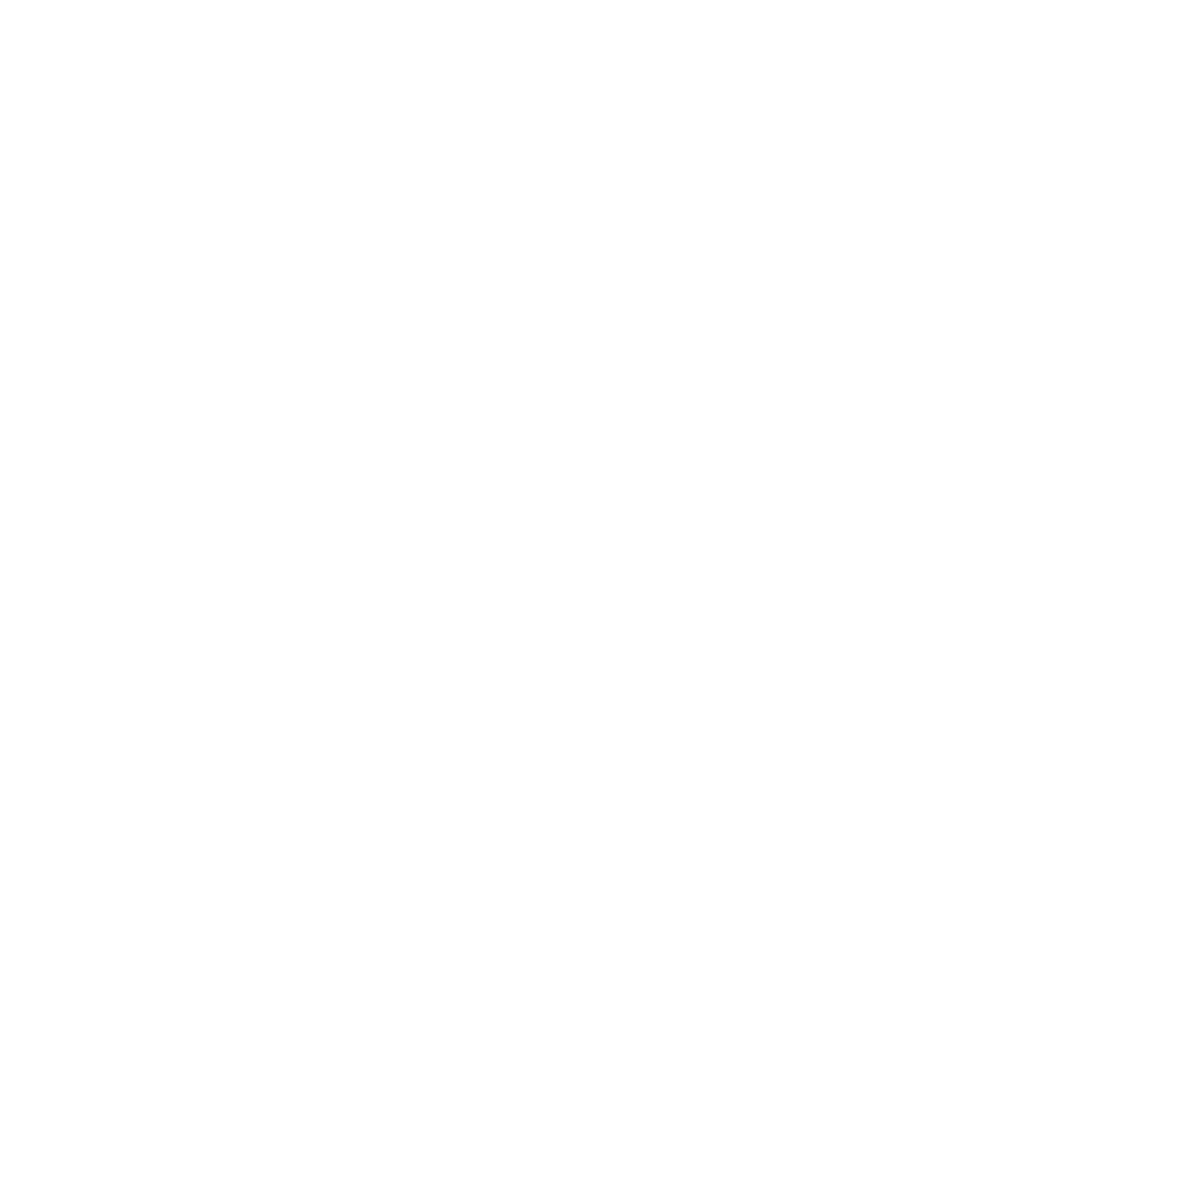 Абдрашит Сыдыханов Знак Луна-Земля, 1990 холст, масло, смешанная техника 100 x 100 см 